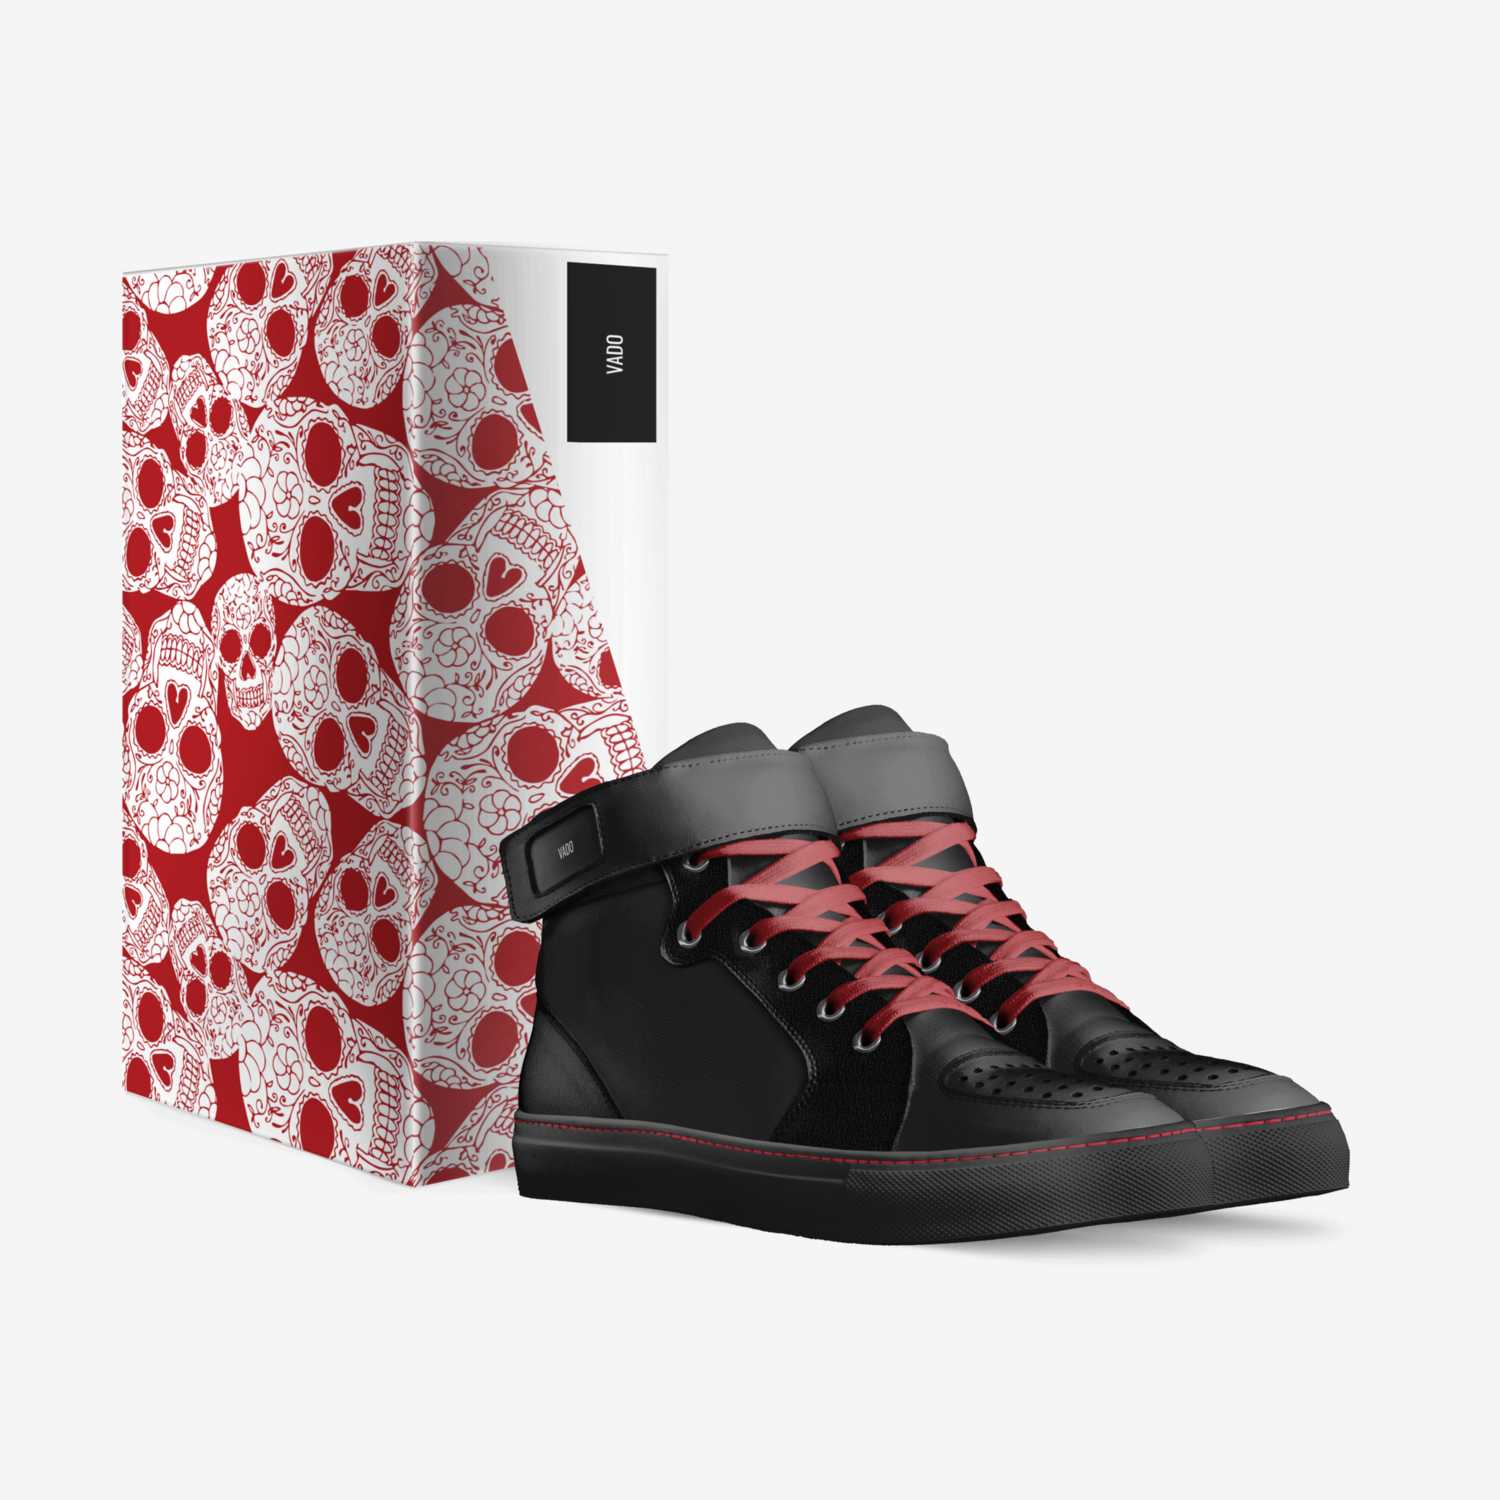 Vado custom made in Italy shoes by Nico Vadillo | Box view